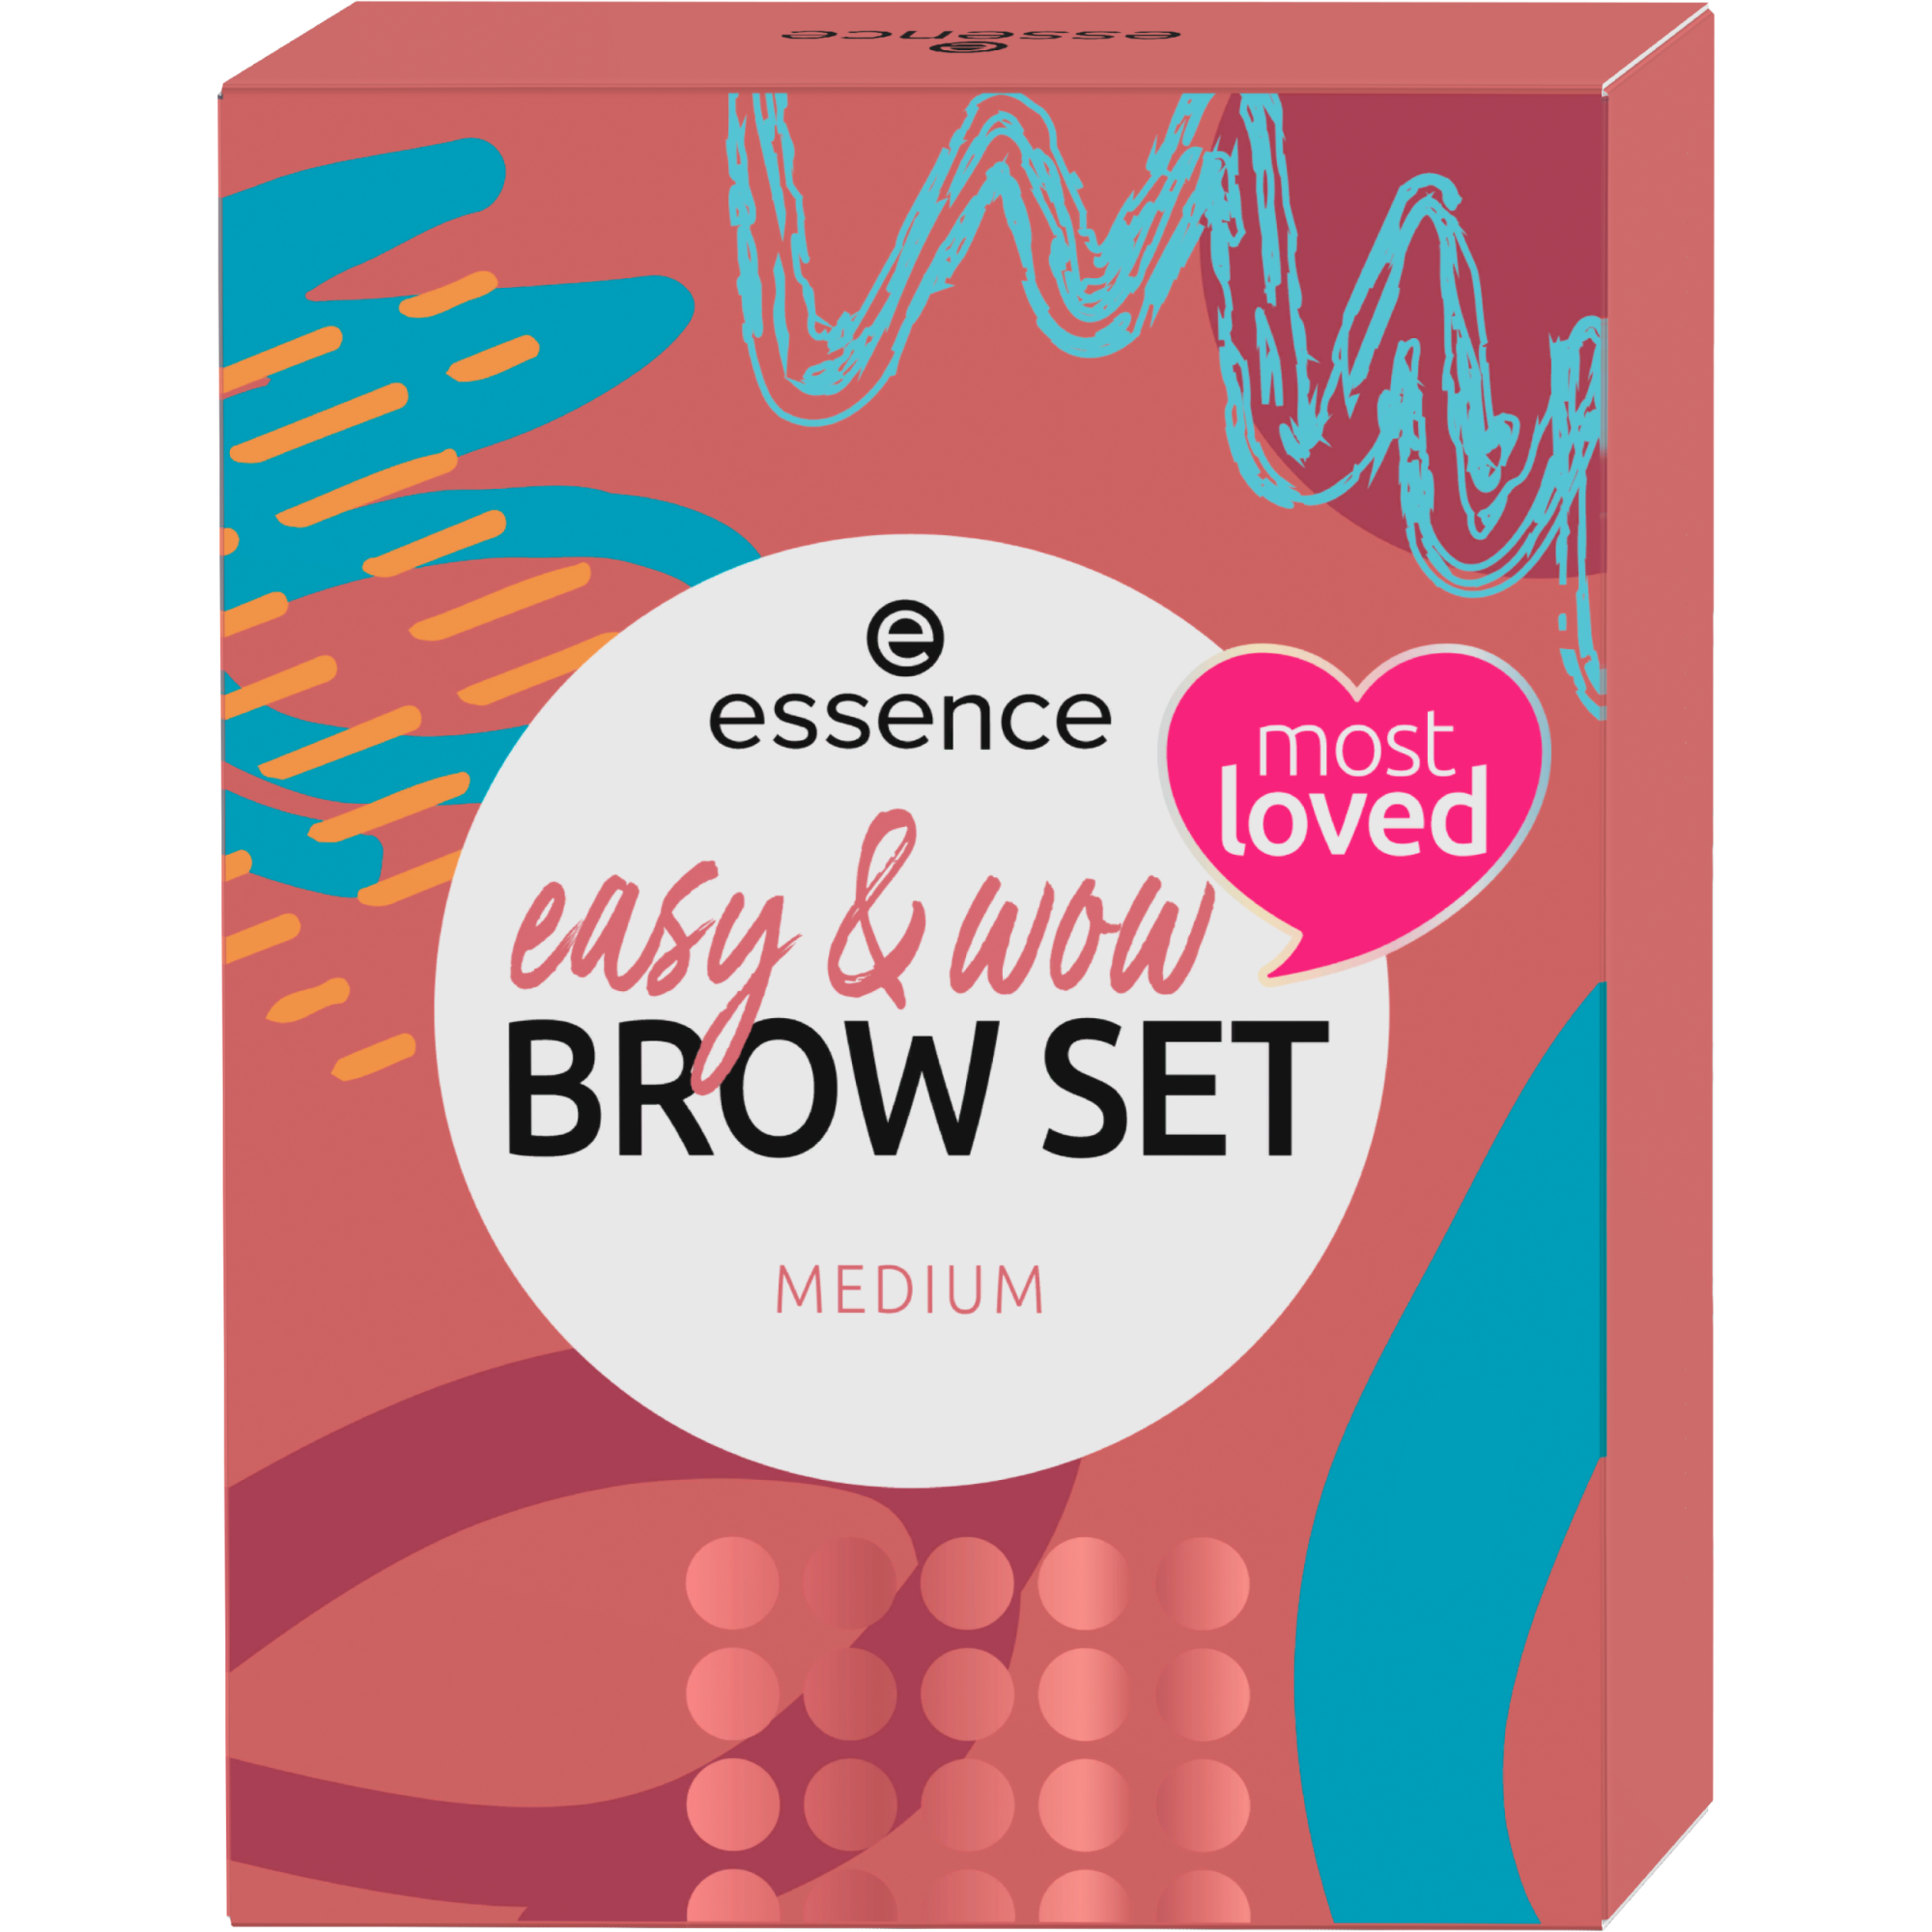 easy & WOW brow set medium